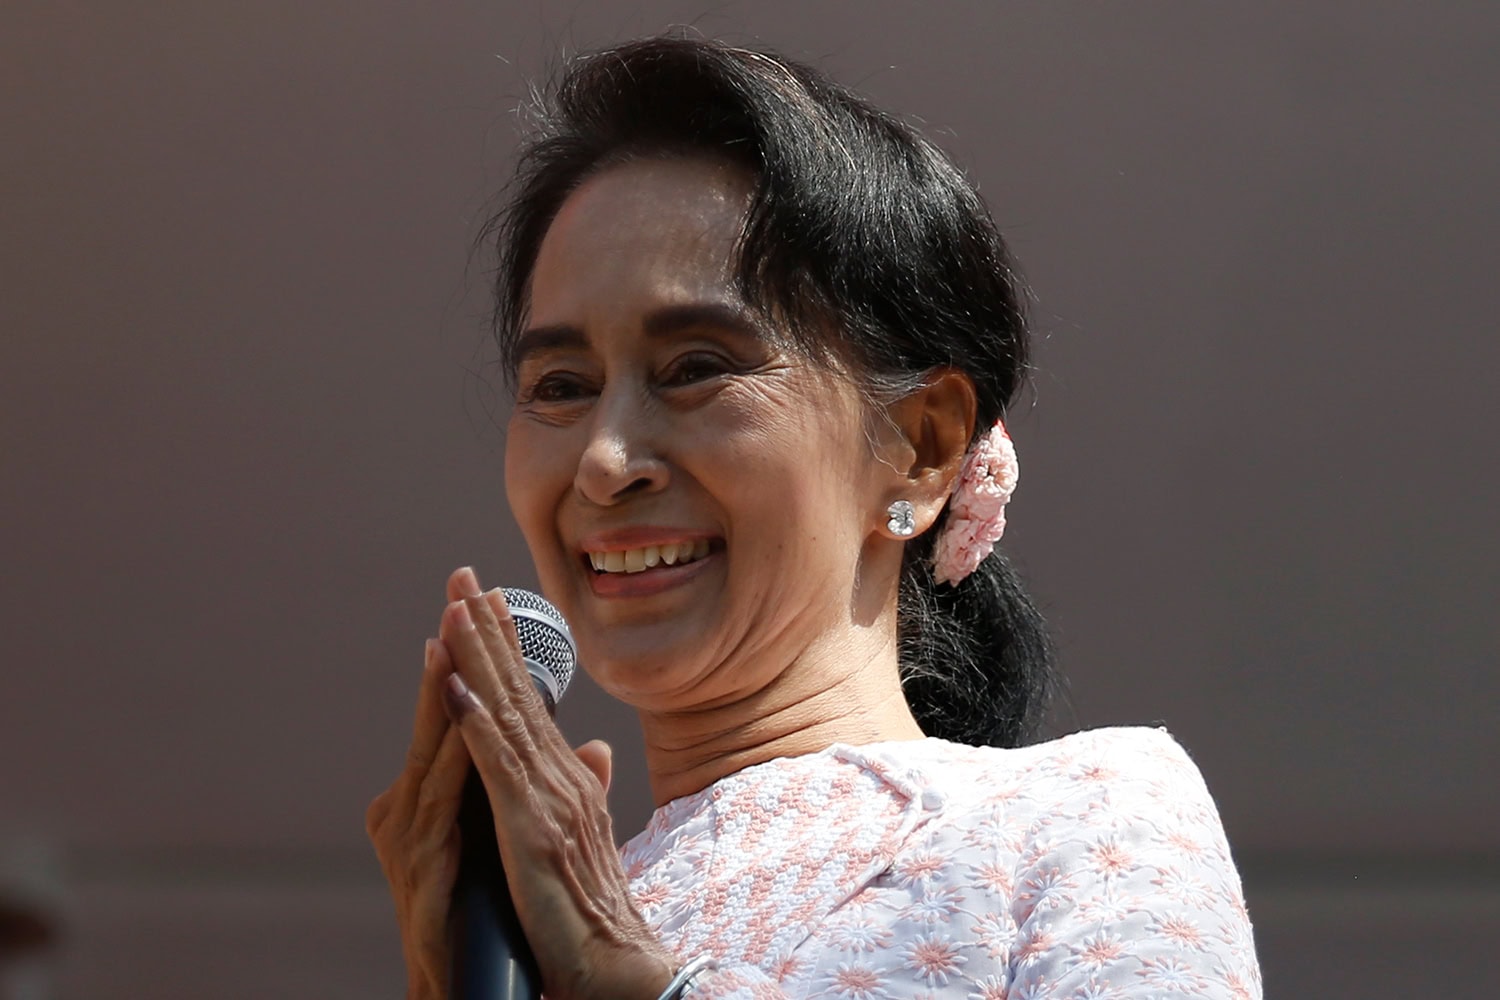 Landslide victory for Nobel Peace Prize Aung San Suu Kyi